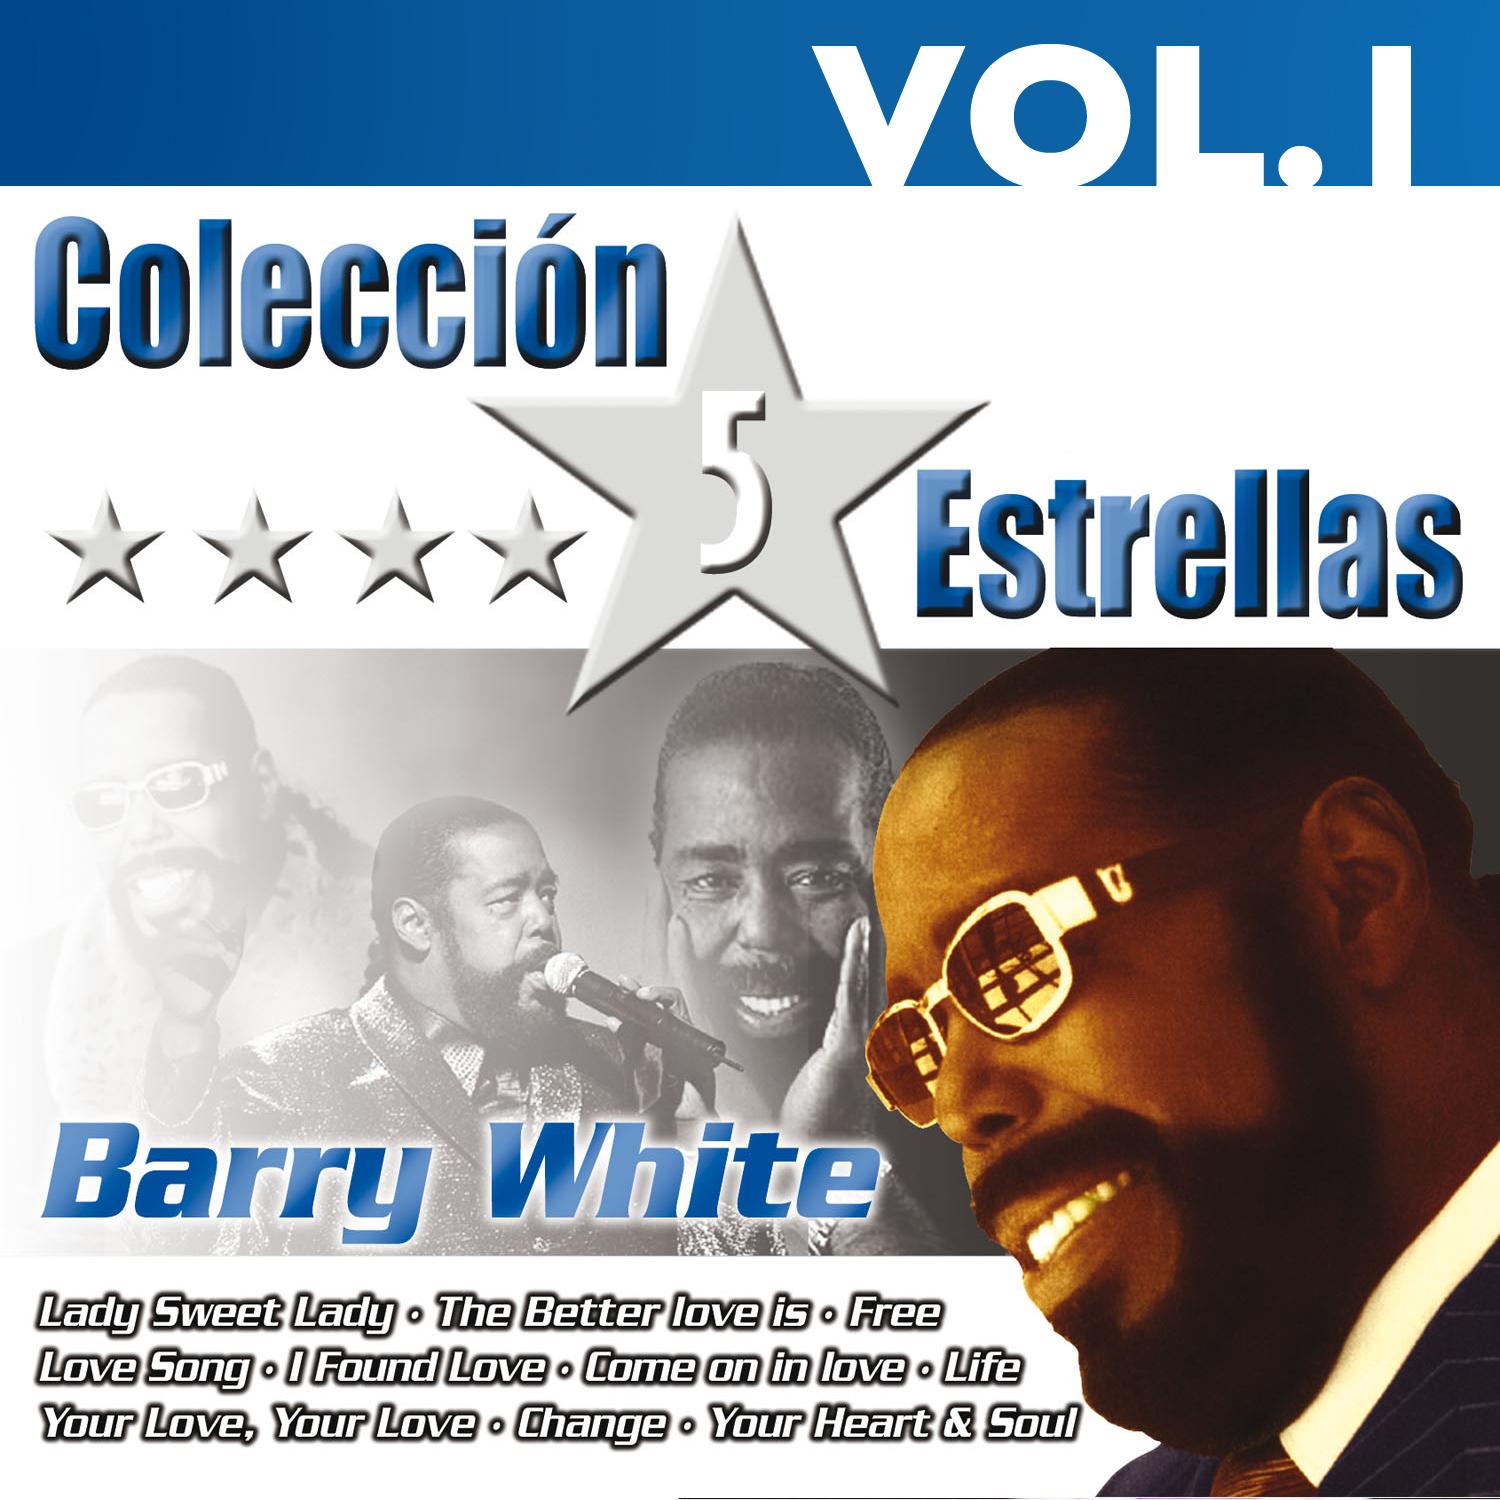 Coleccio n 5 Estrellas. Barry White. Vol. 1